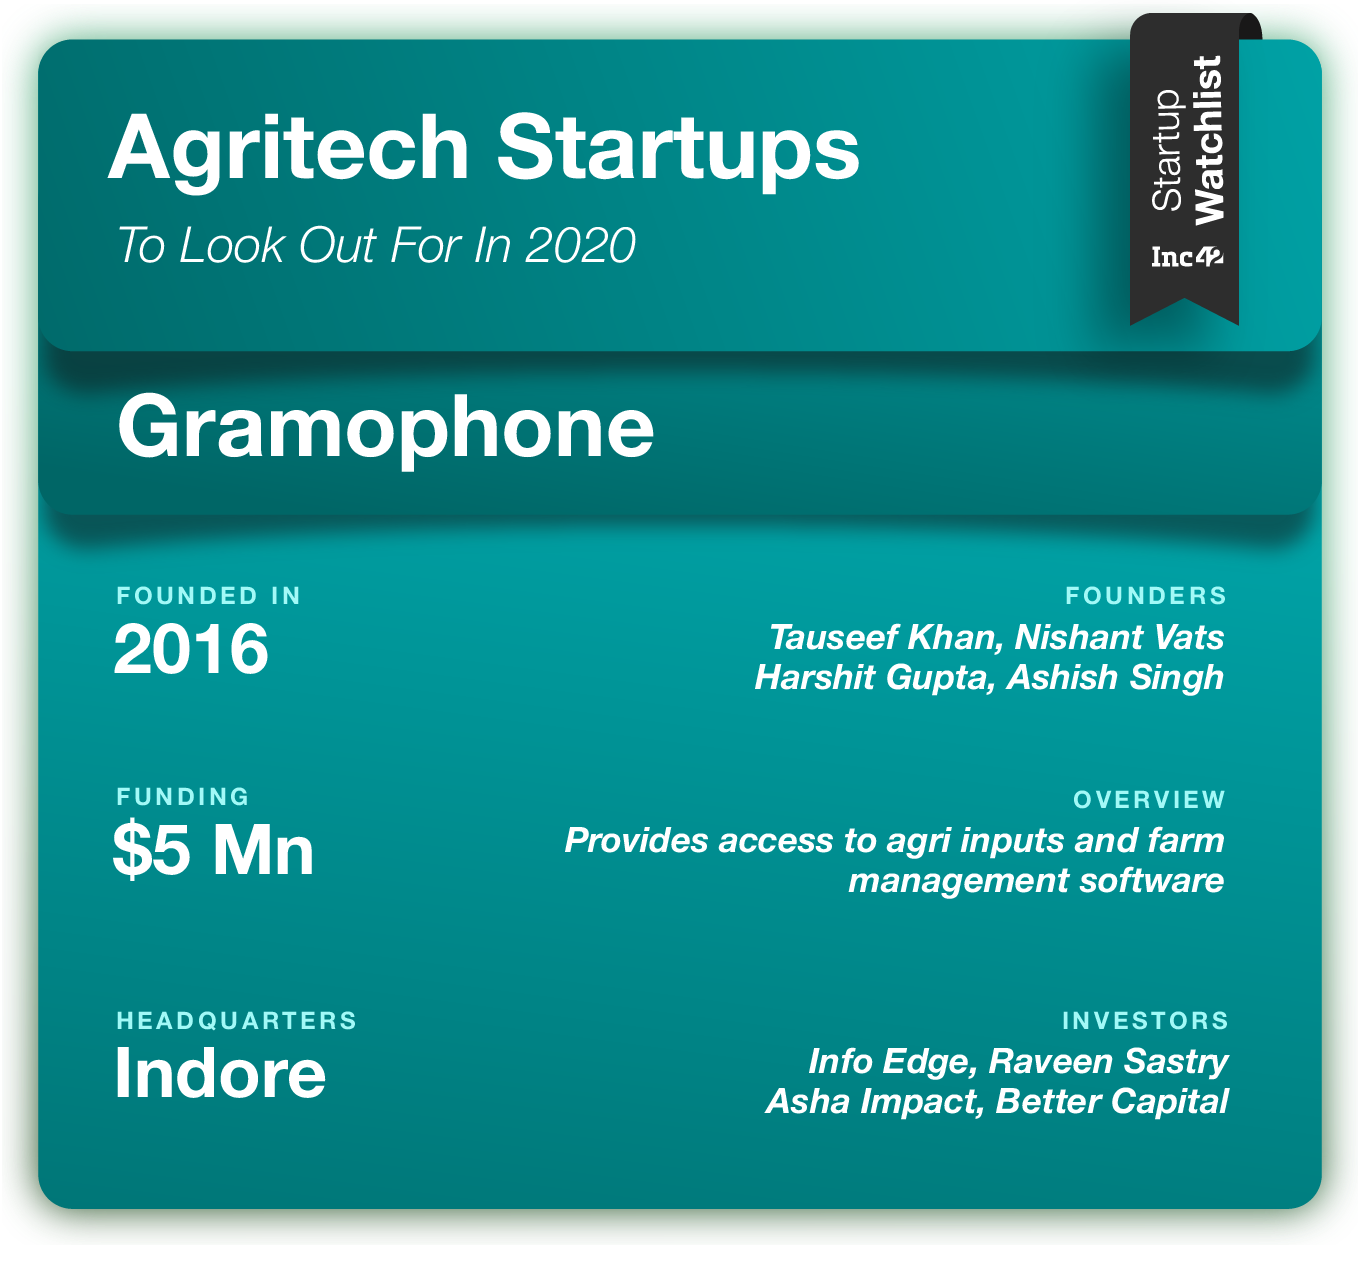 Gramophone agritech startups